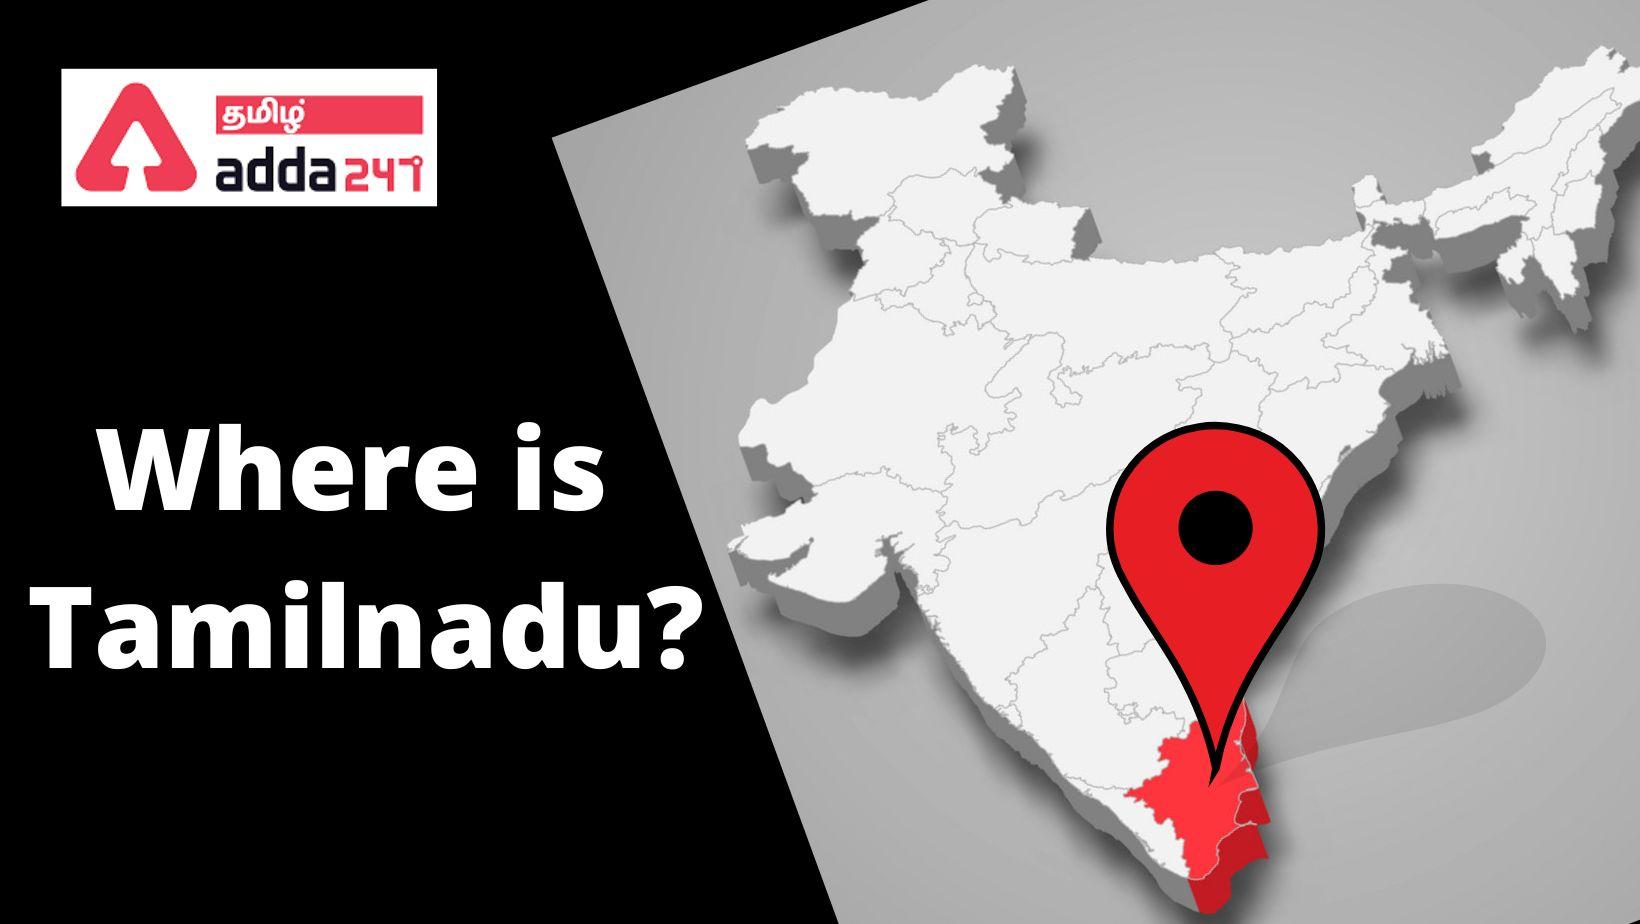 Where is Tamilnadu?